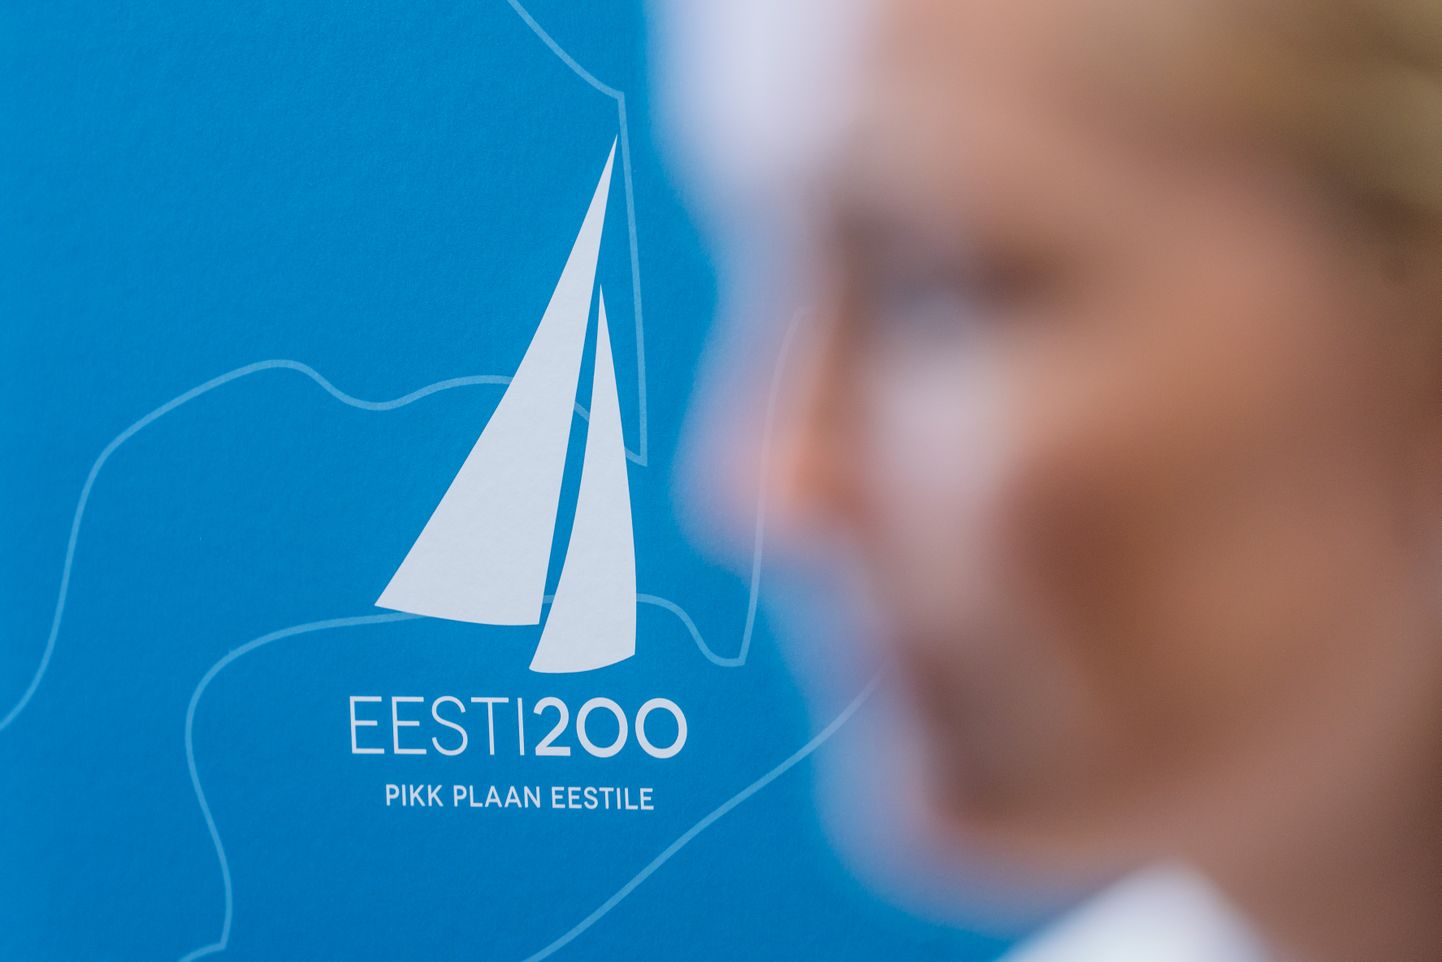 Логотип партии "Эстония 200". Иллюстративное фото.